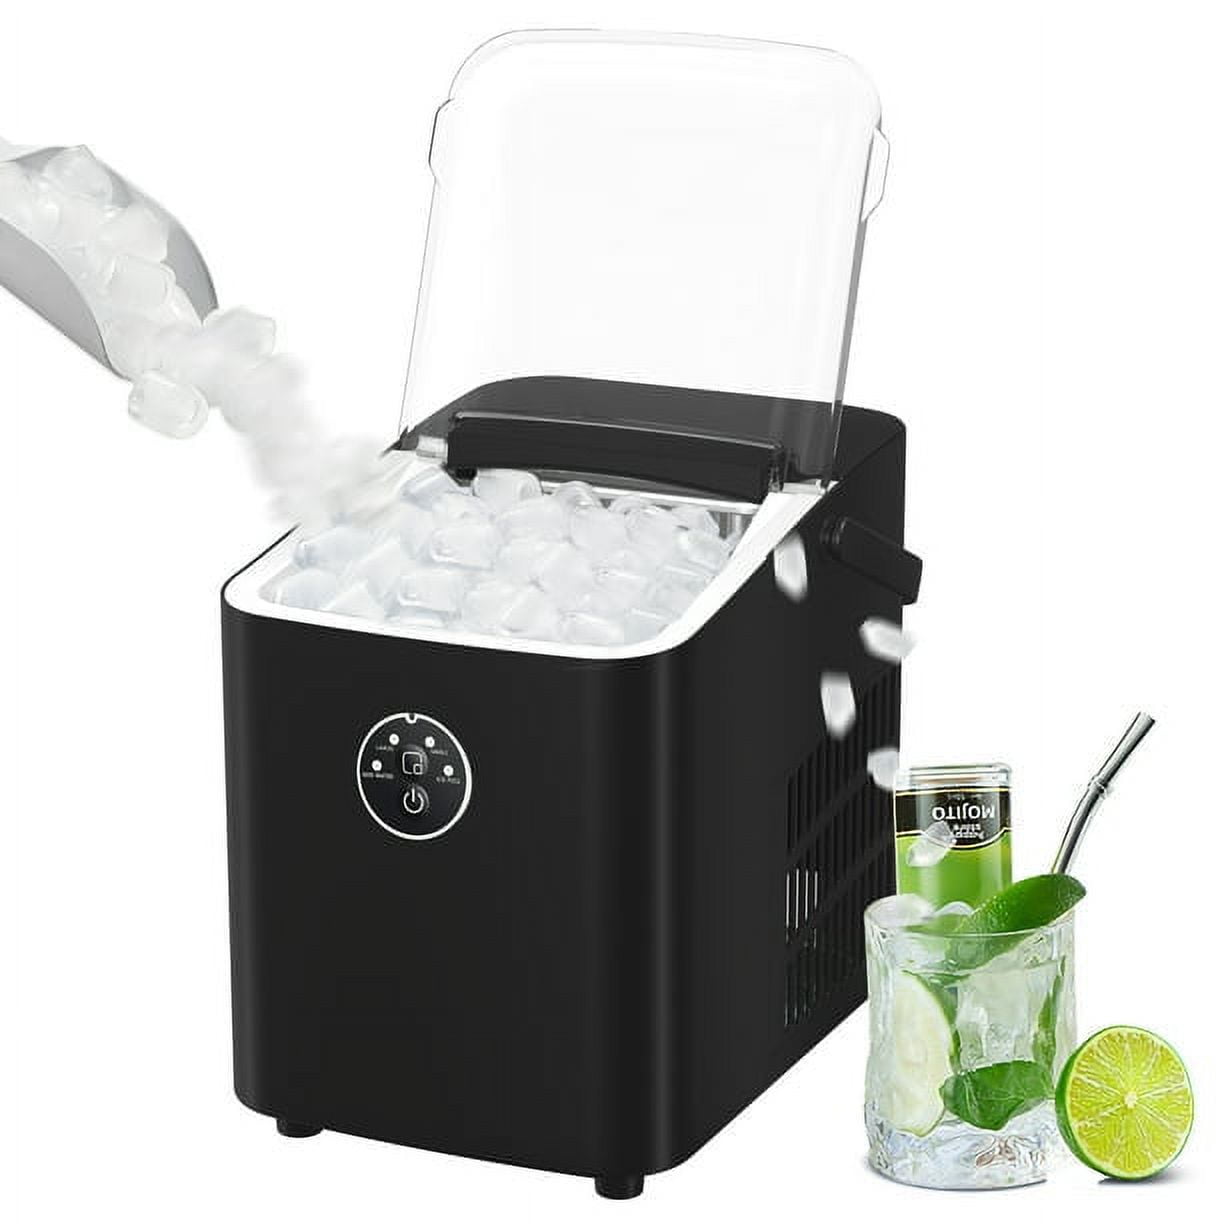 Portable Countertop Ice Maker Machine - Zvoutte Self-Cleaning Countertop  Ice Makers with Ice Scoop and Basket, Black